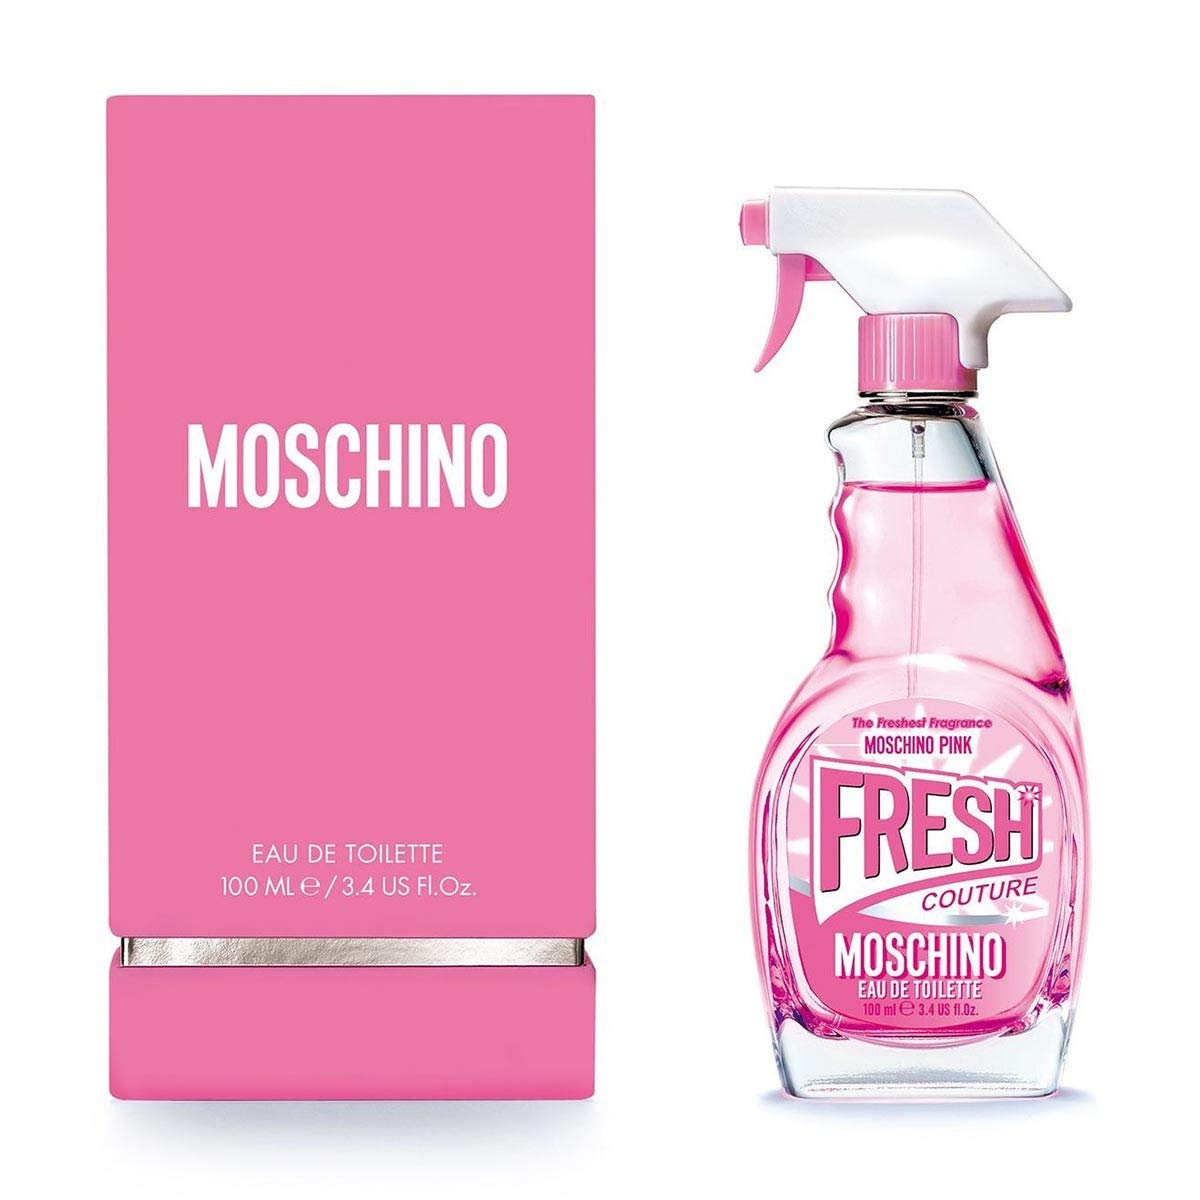 Moschino Pink Fresh Couture Eau de Toilette, Perfume for Women, 3.4 Oz